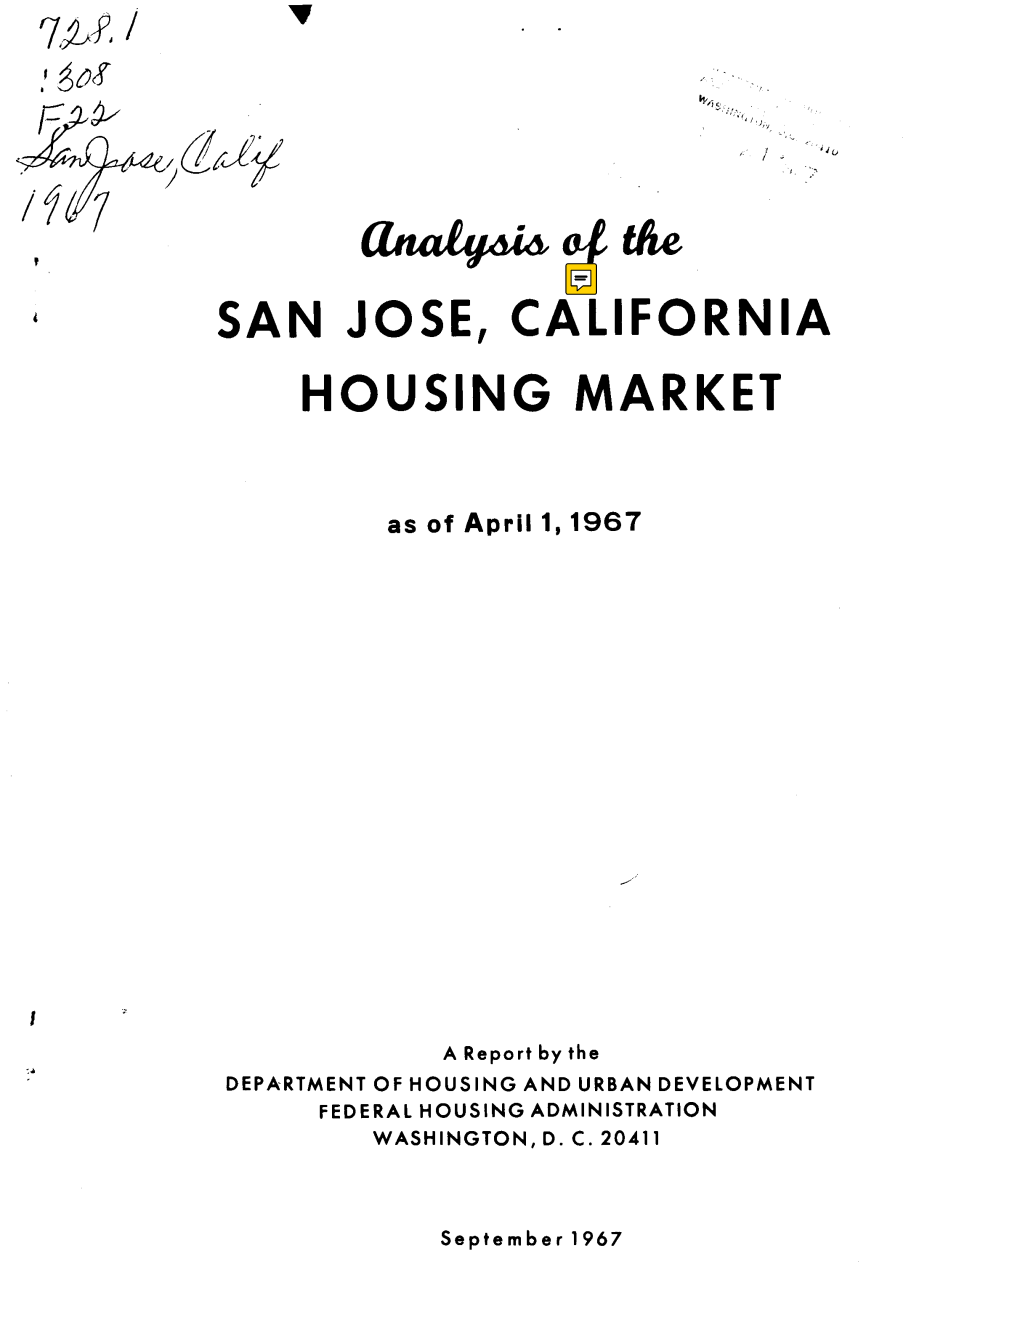 Analysis of the San Jose, California Housing Market (1967)